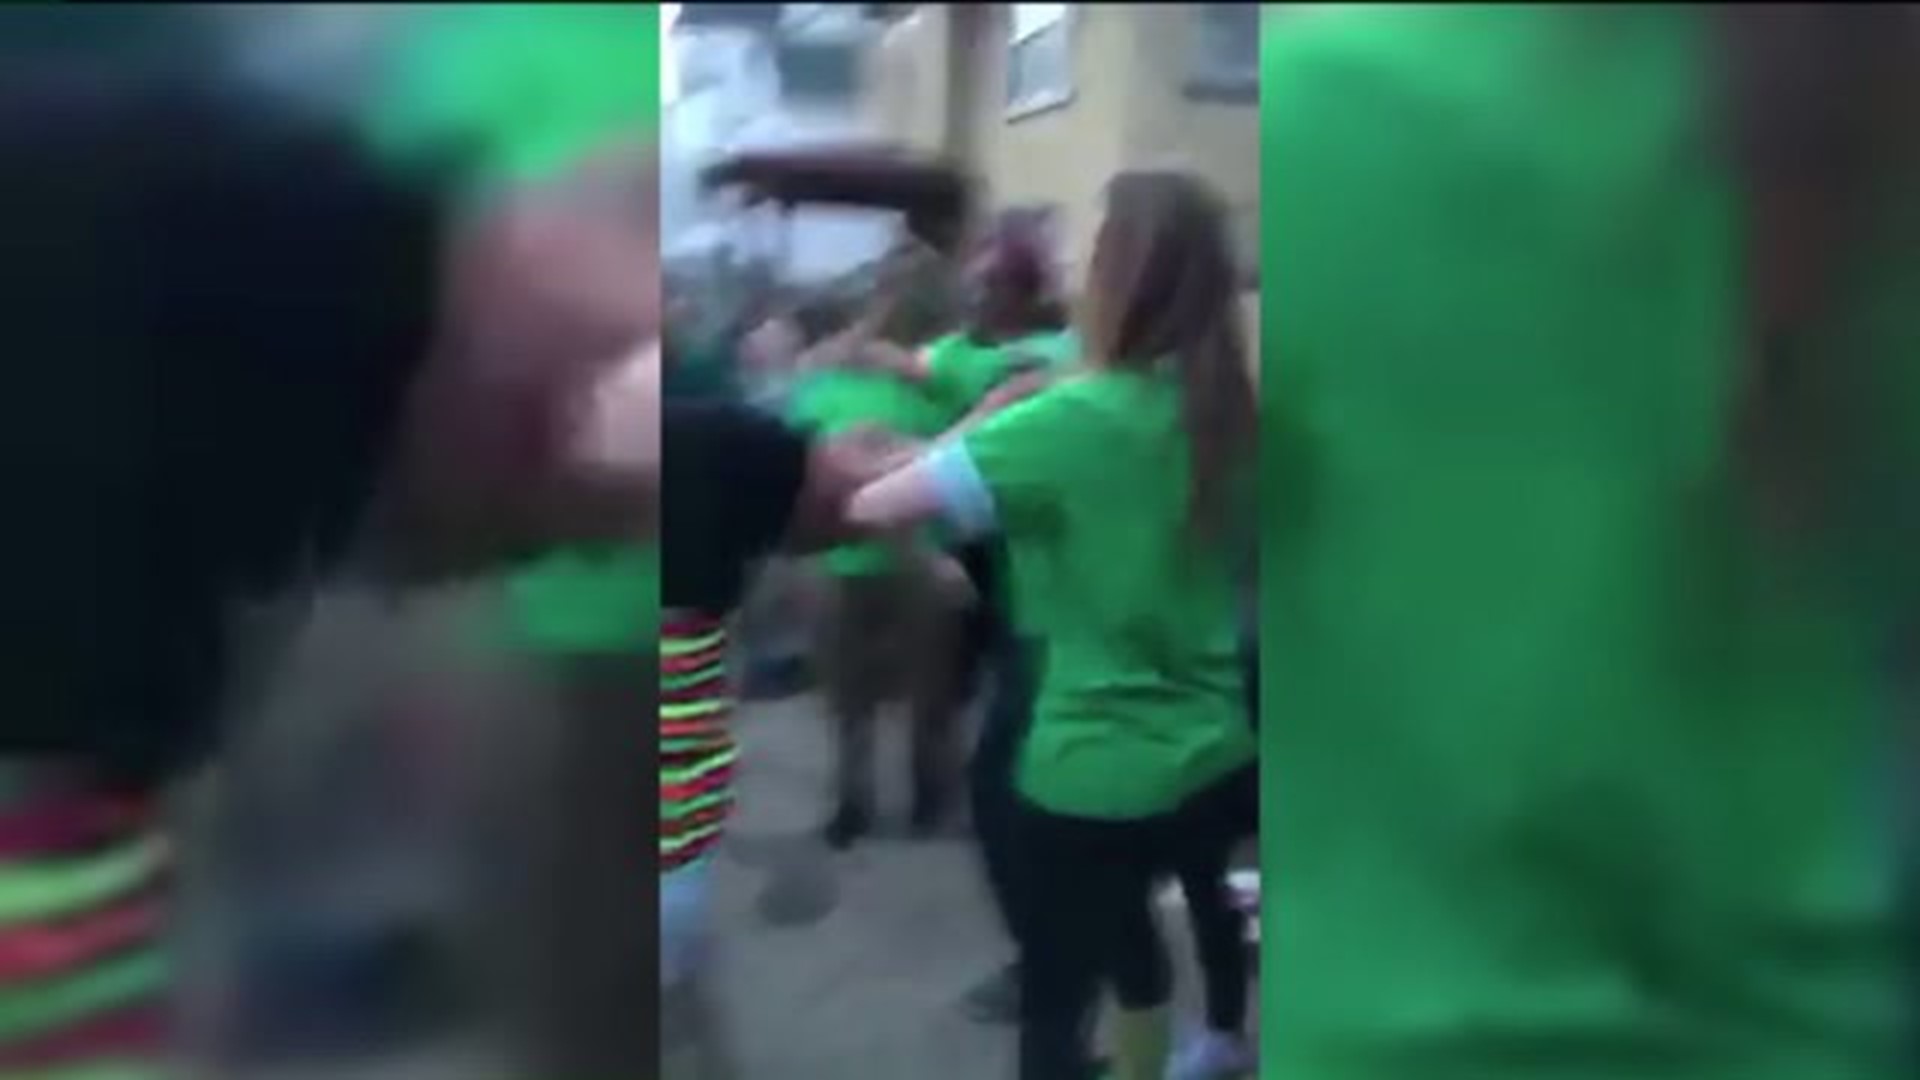 Parade Day Brawl in Scranton Caught on Video